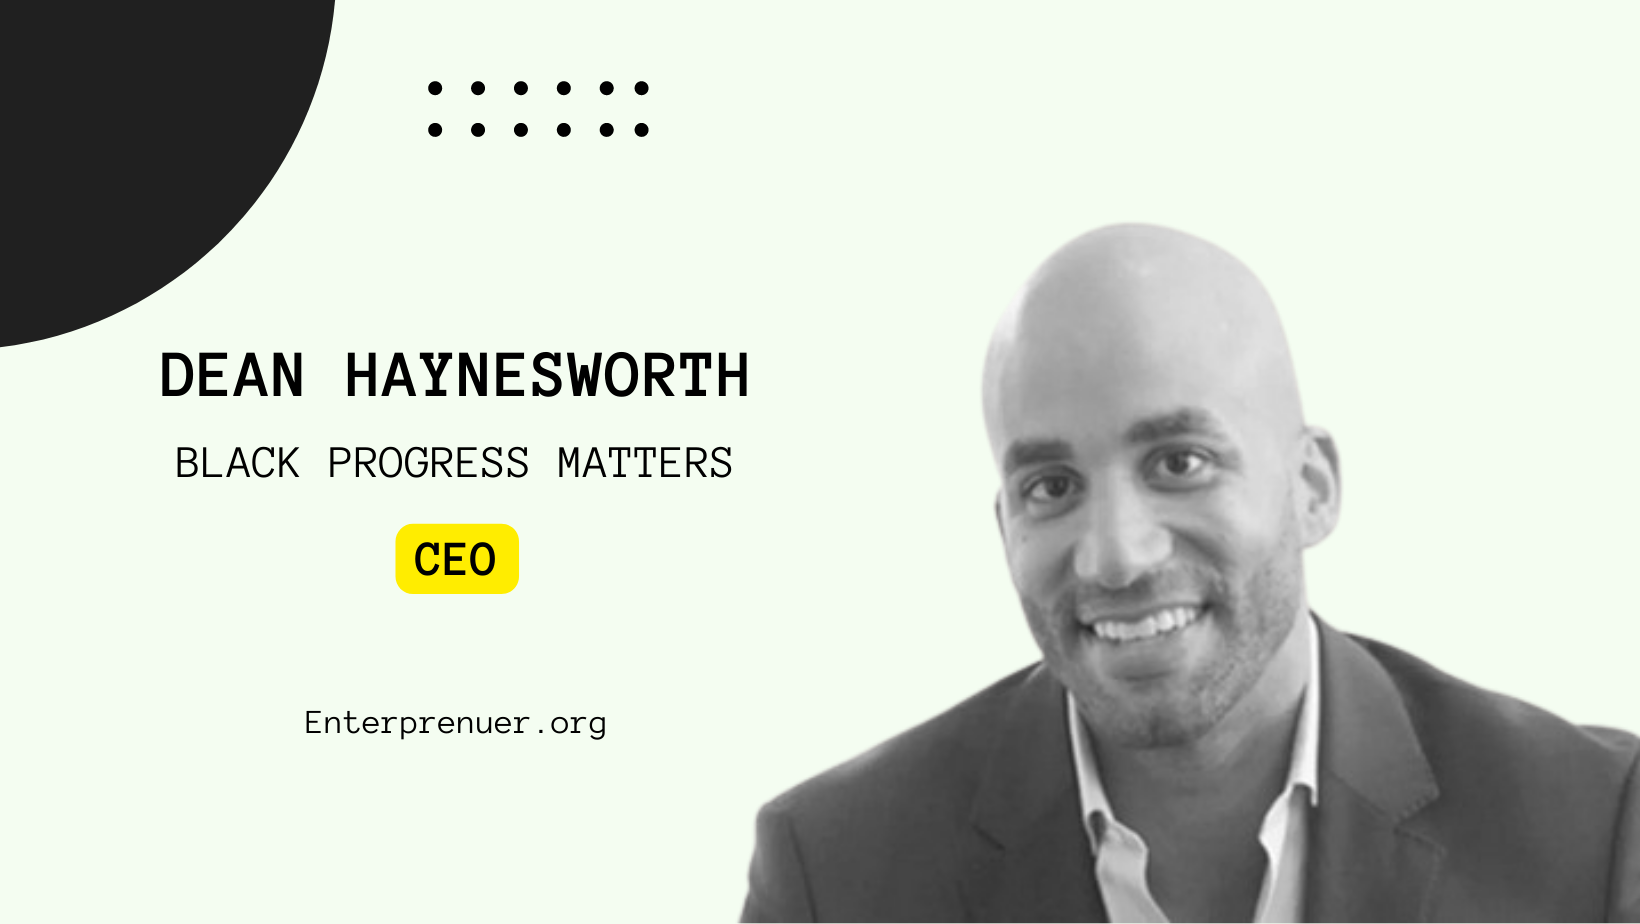 Dean Haynesworth CEO of Black Progress Matters